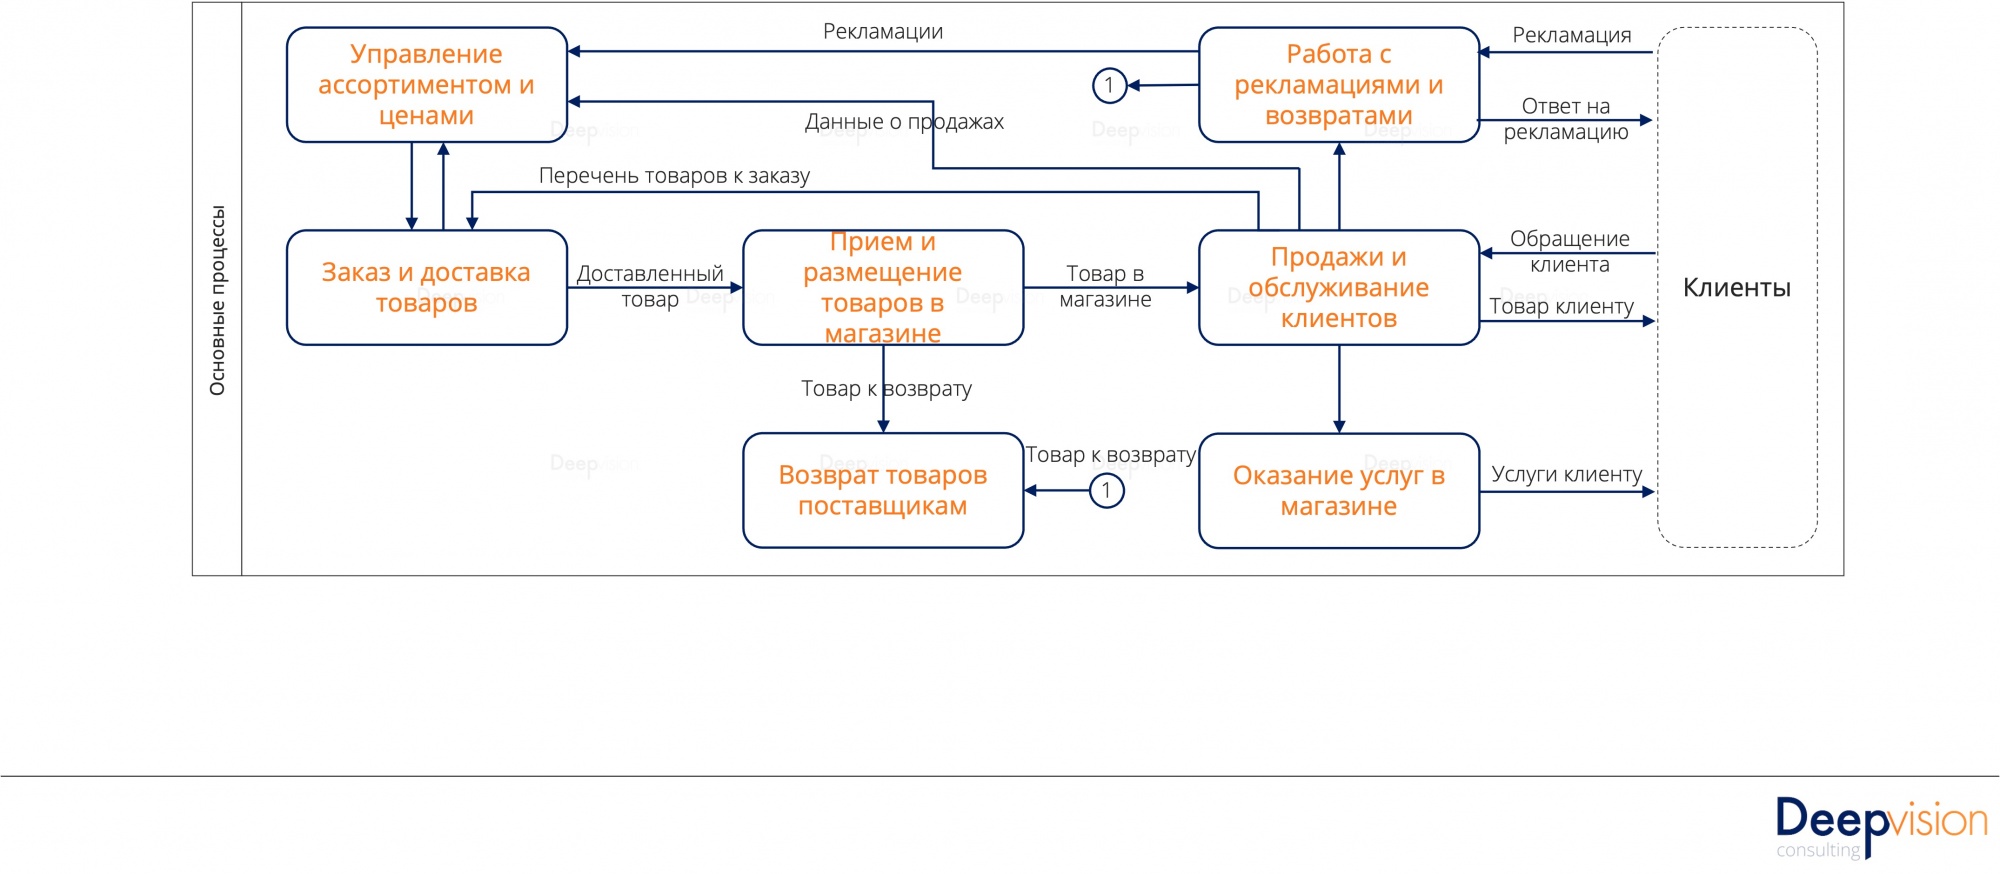 Корпоративная карта бизнес-процессов. Инструкция Шаг 4.jpg